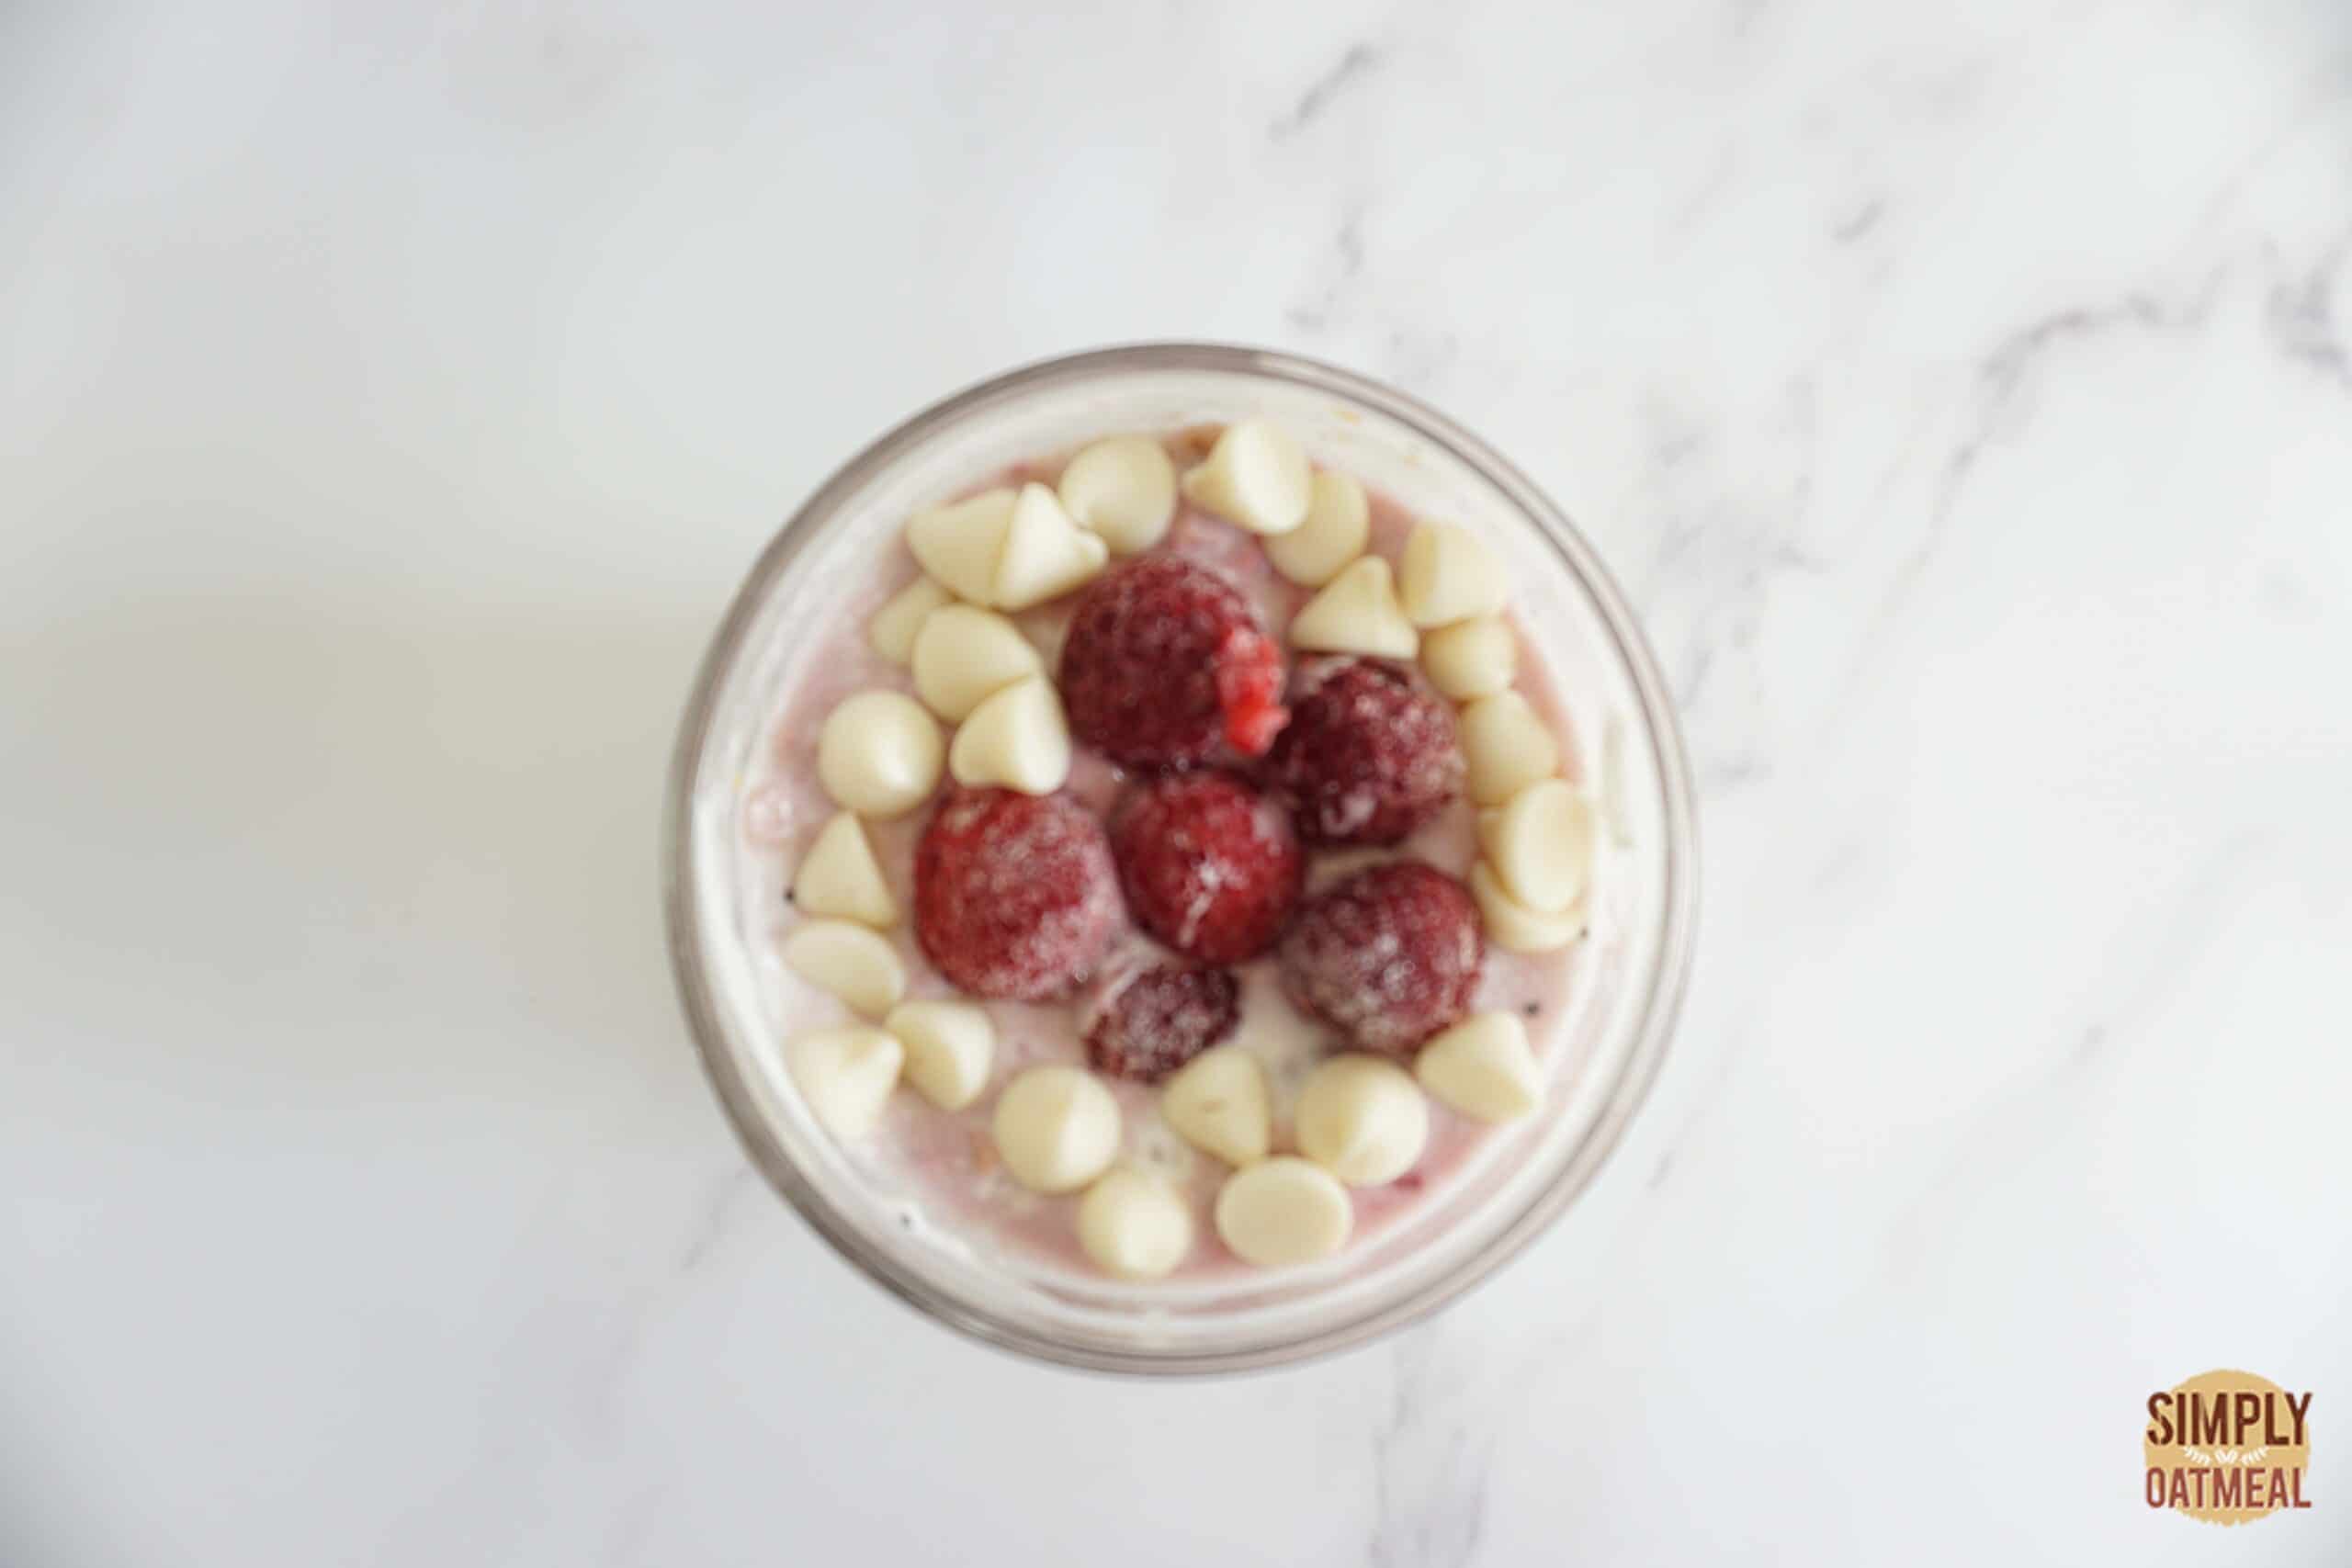 Raspberry white chocolate overnight oats topped with fresh raspberries and white chocolate chips.